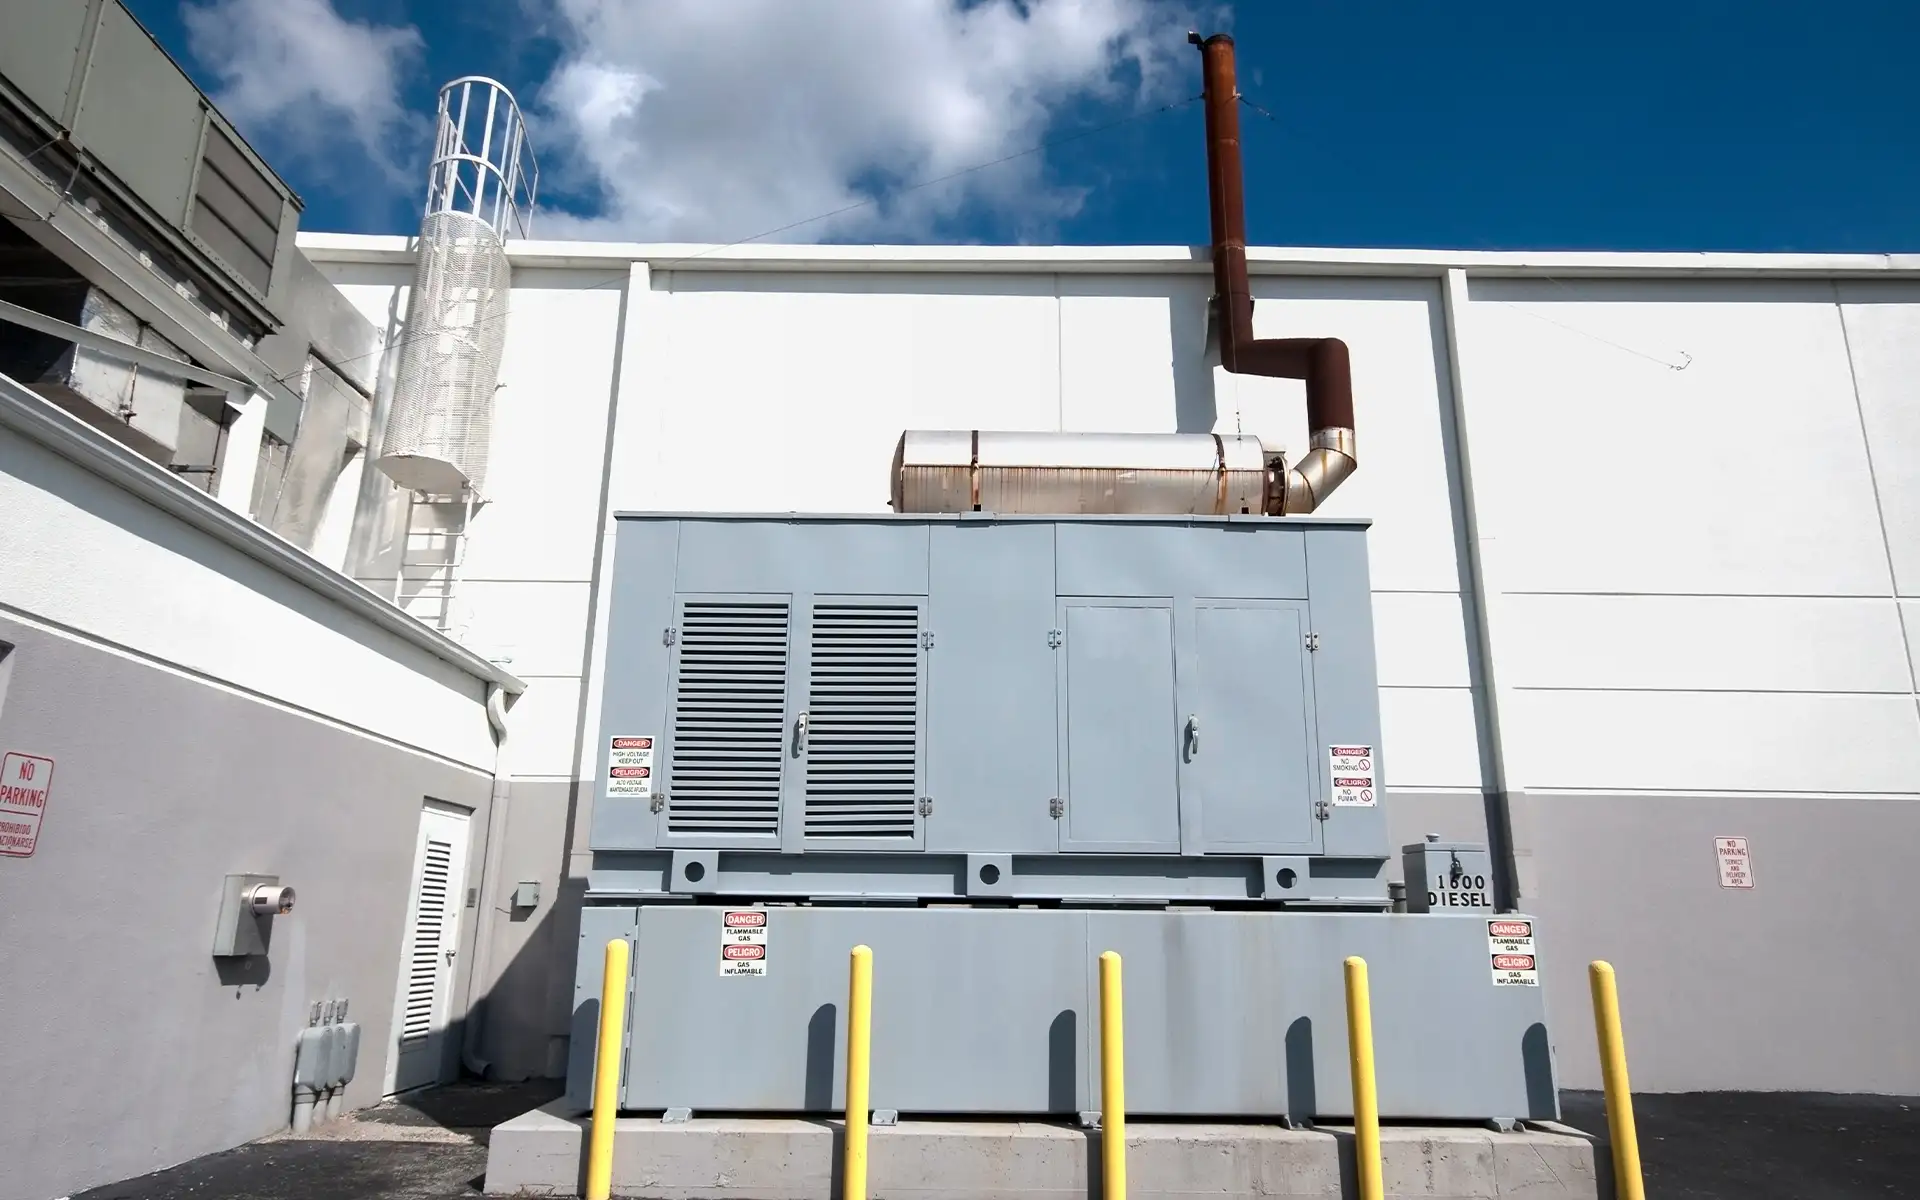 Generator at Data Center Inspected During Environmental Audit